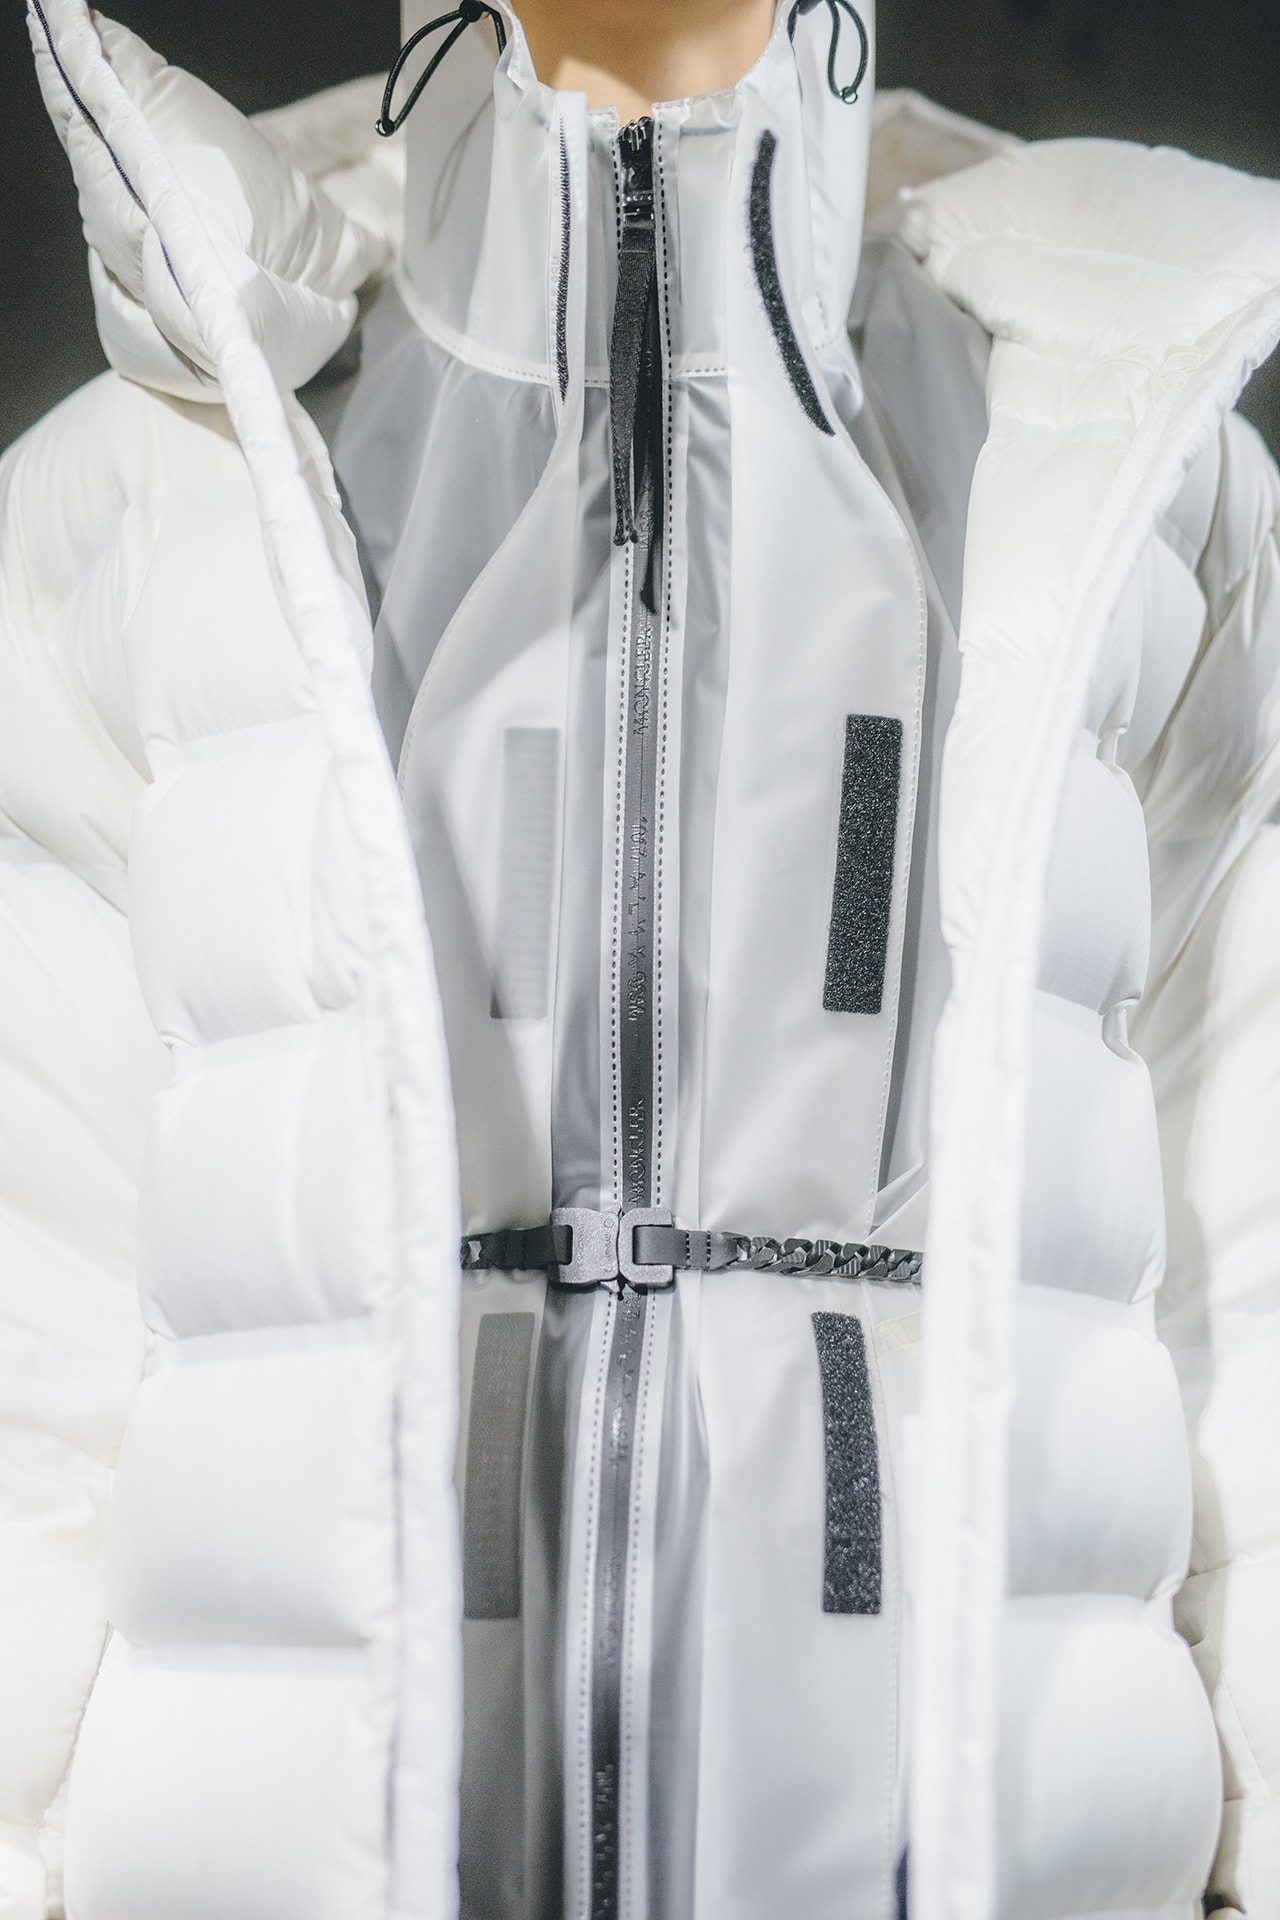 Moncler Genius Milan Fashion Week Presentation 2019 Alyx Collaboration Matthew Williams White Puffer Jacket Belt